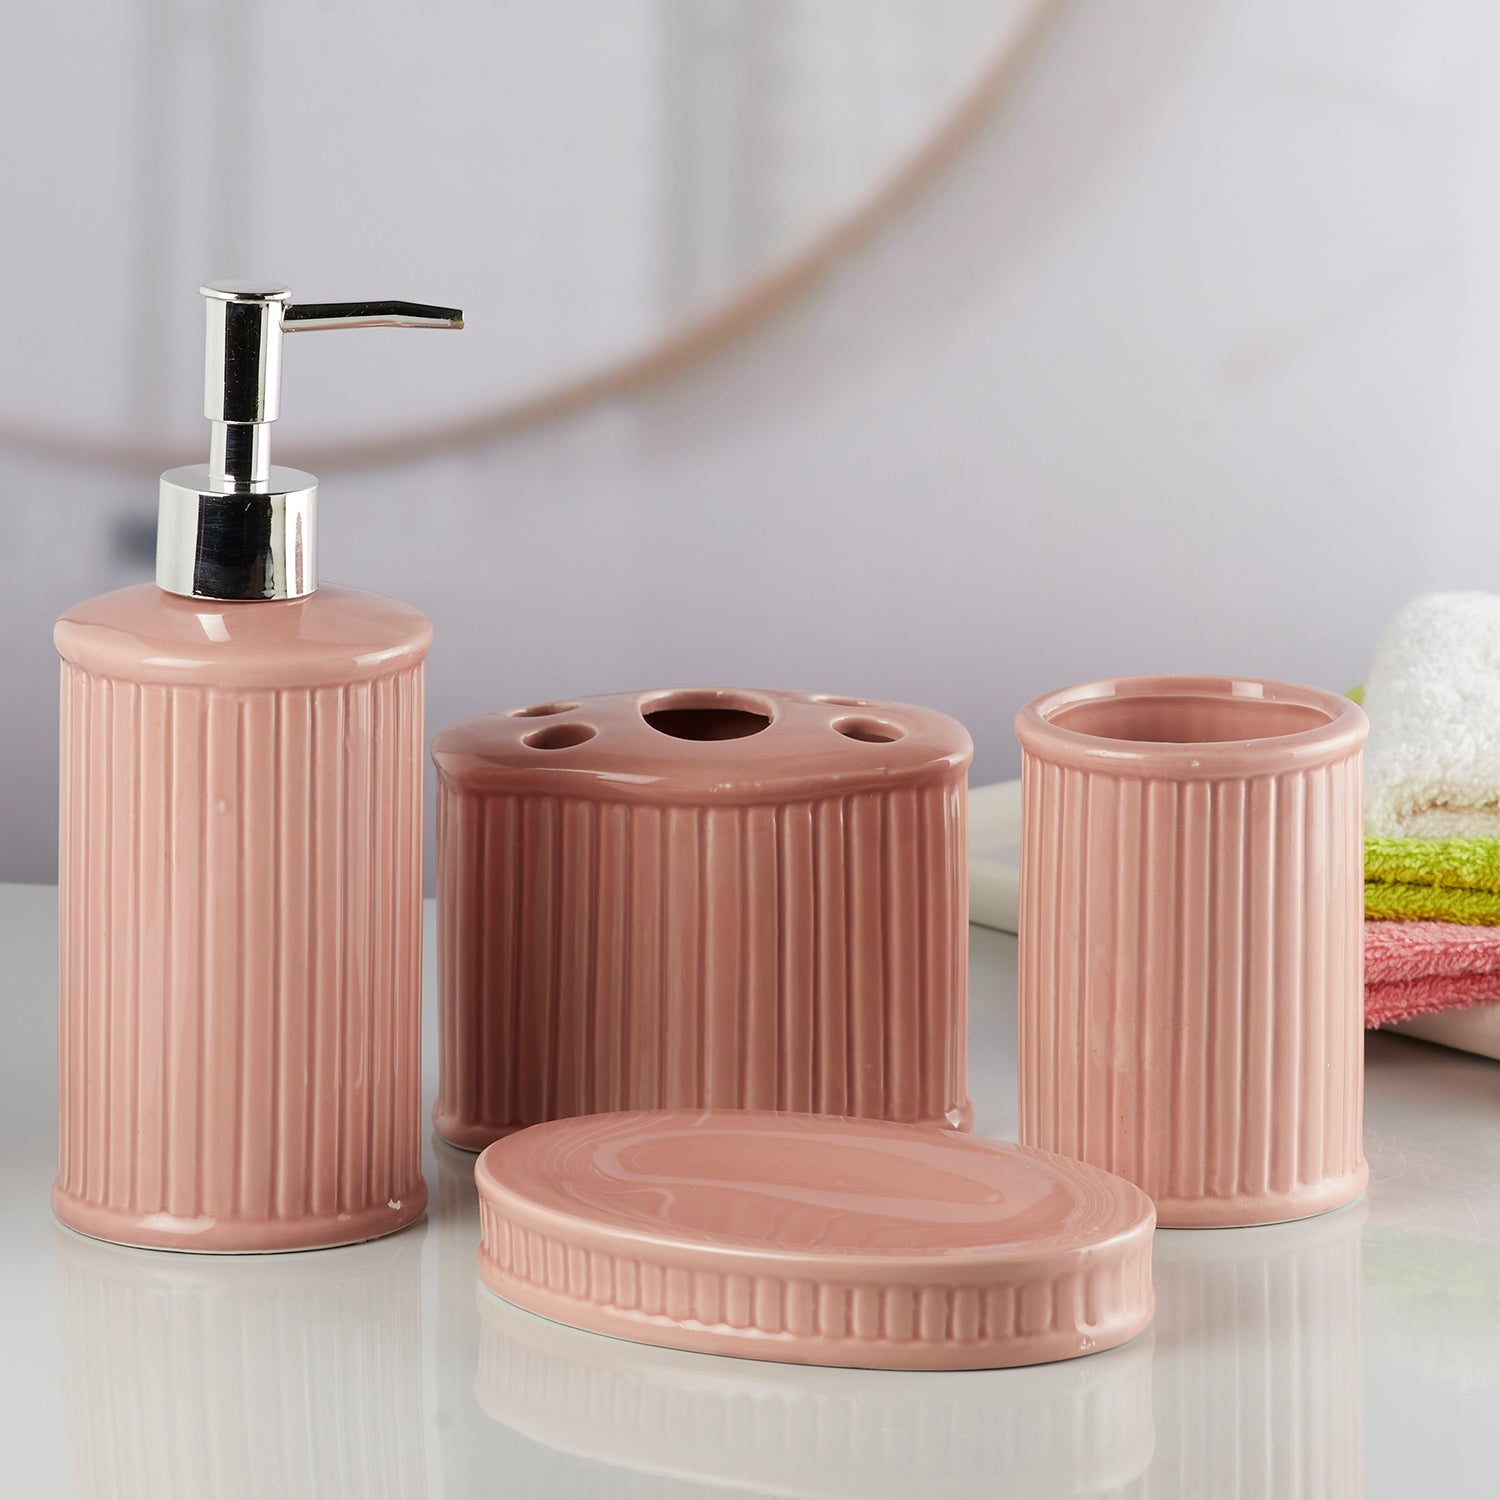 Ceramic Bathroom Accessories Set of 4 Bath Set with Soap Dispenser (8194)